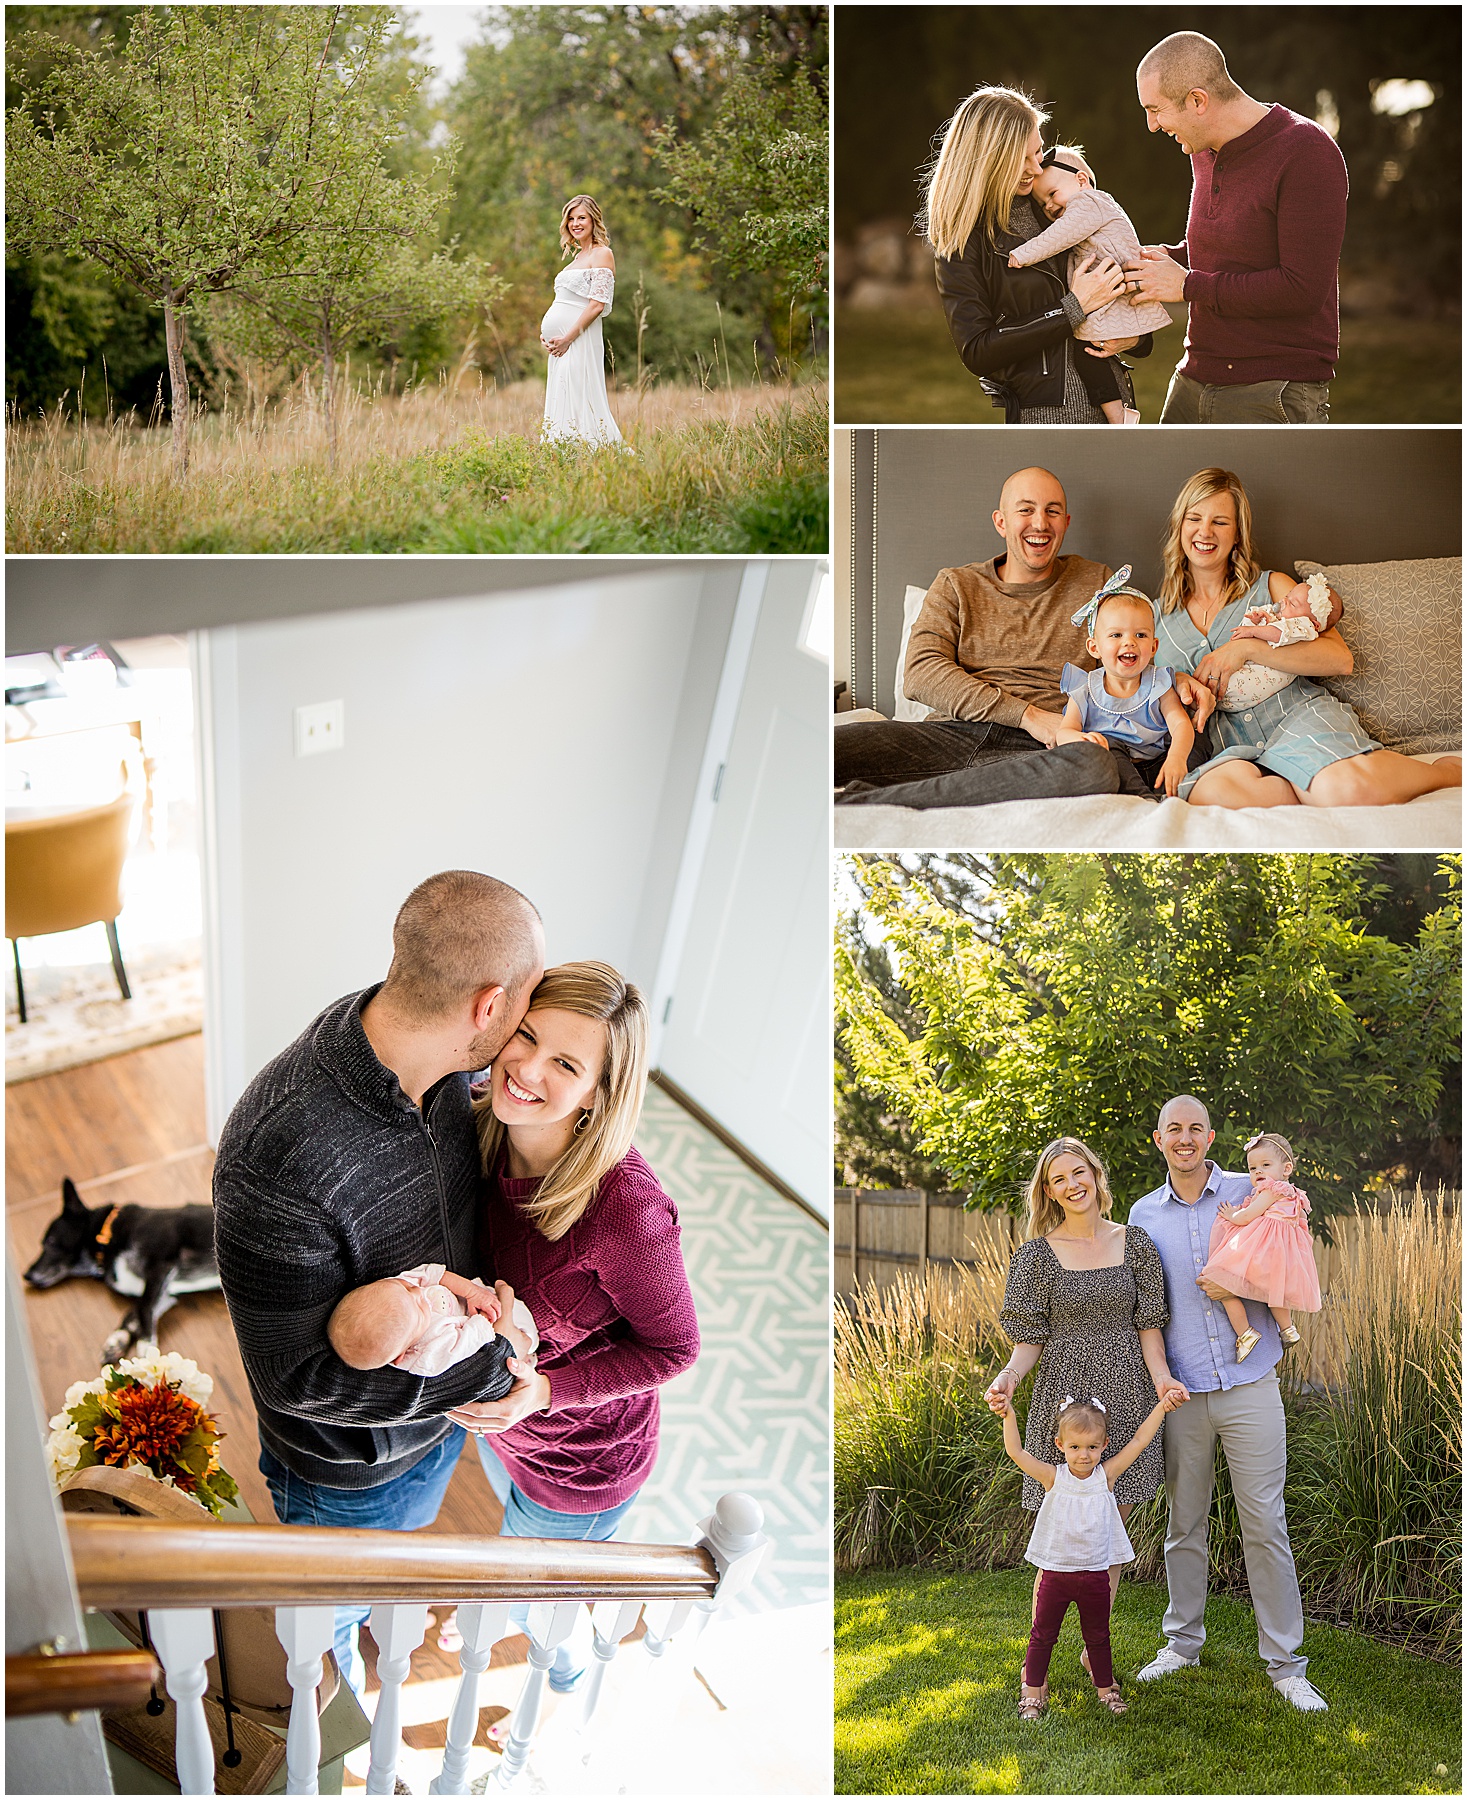 The Client Experience, Colorado Wedding Photographer, Colorado portrait photographer, destination photographer, family photographer, portrait photographer, wedding photographer